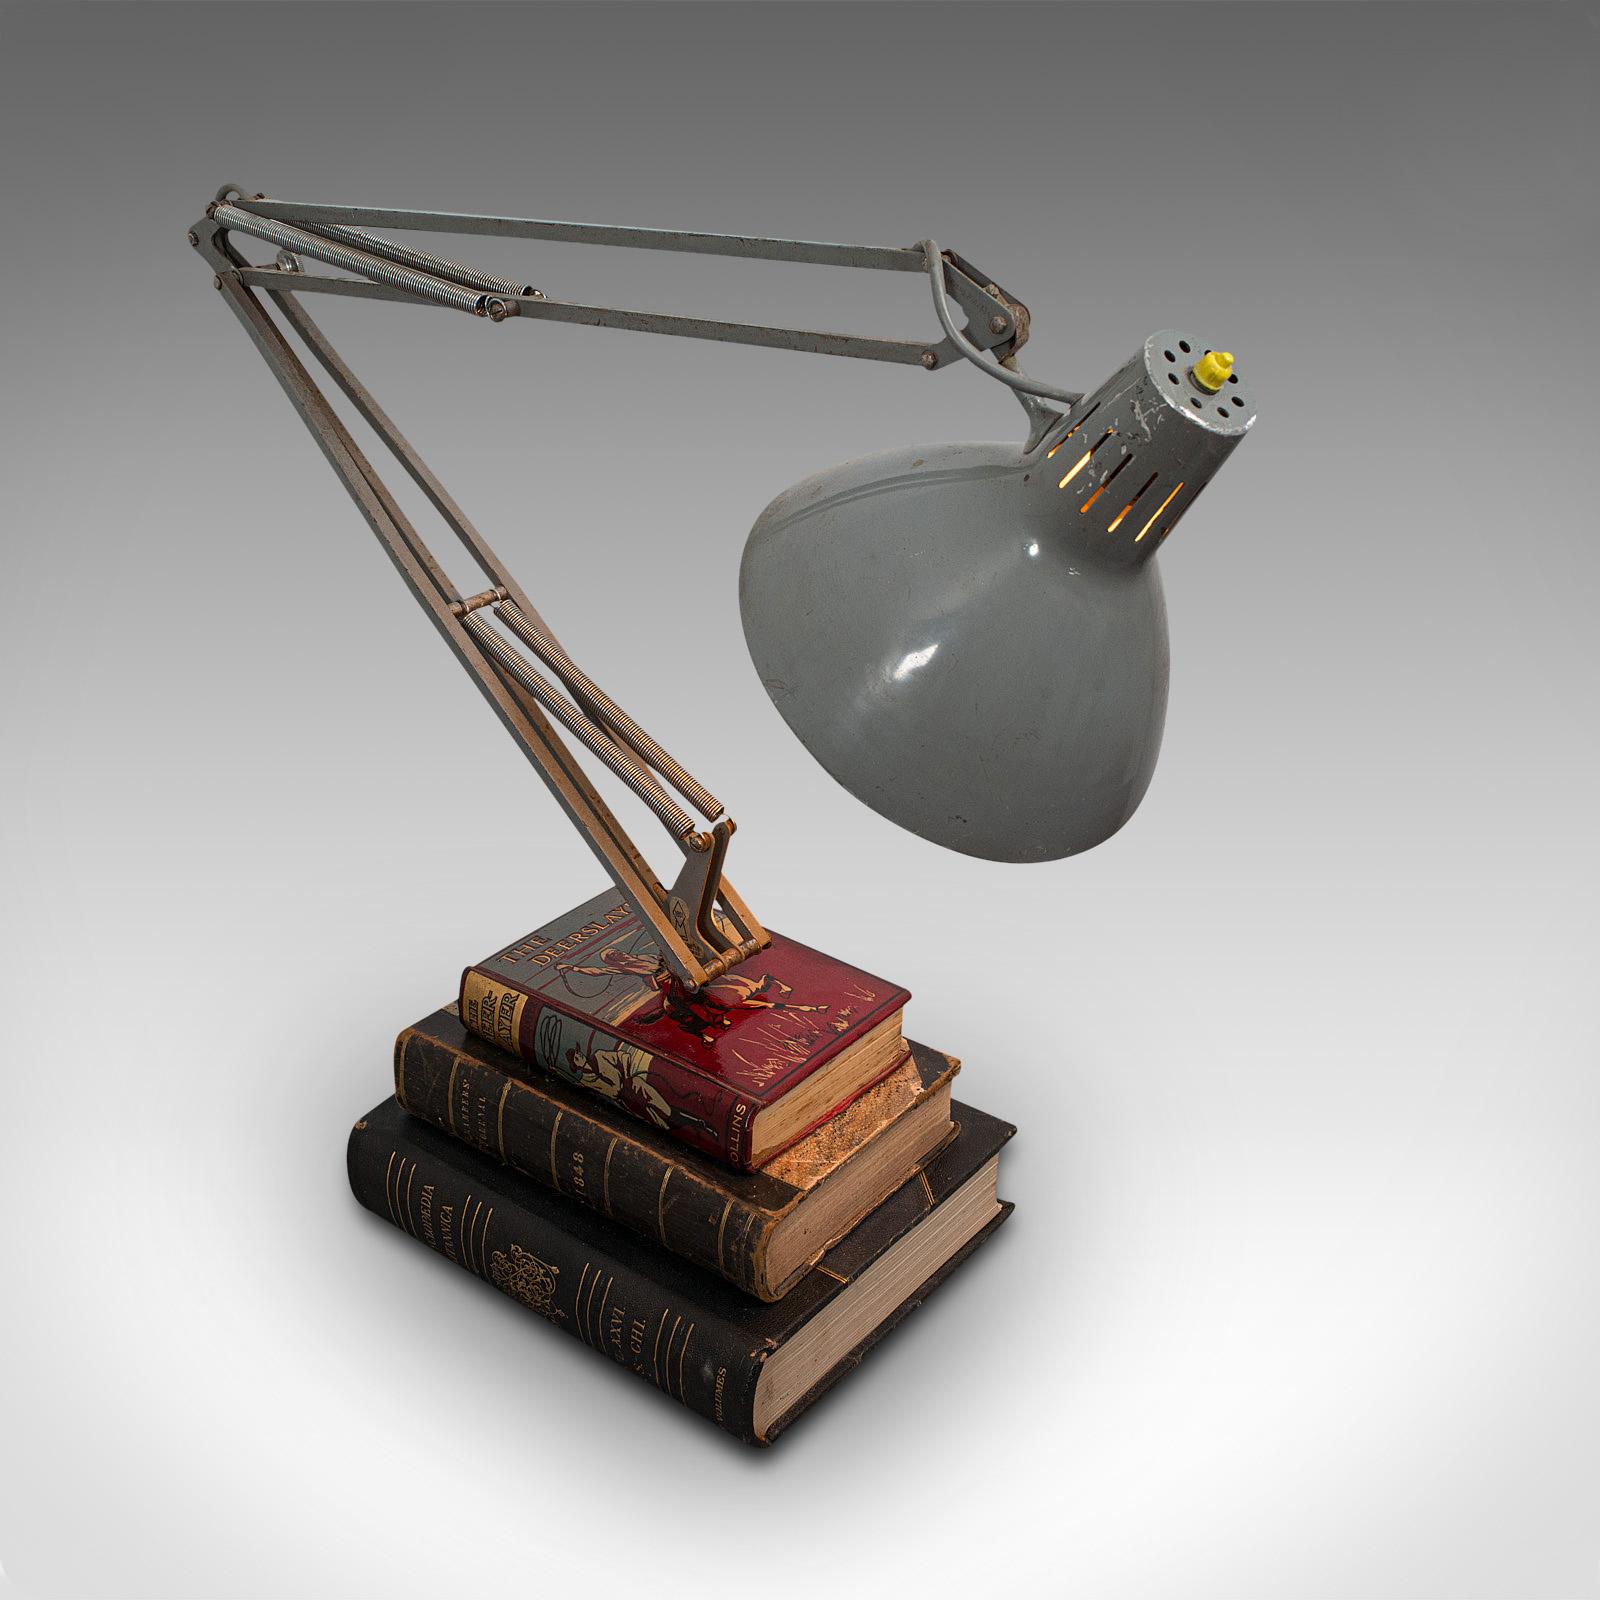 Steel Vintage Anglepoise Lamp English Desk, Architect's Light, Bibliophile, circa 1960 For Sale